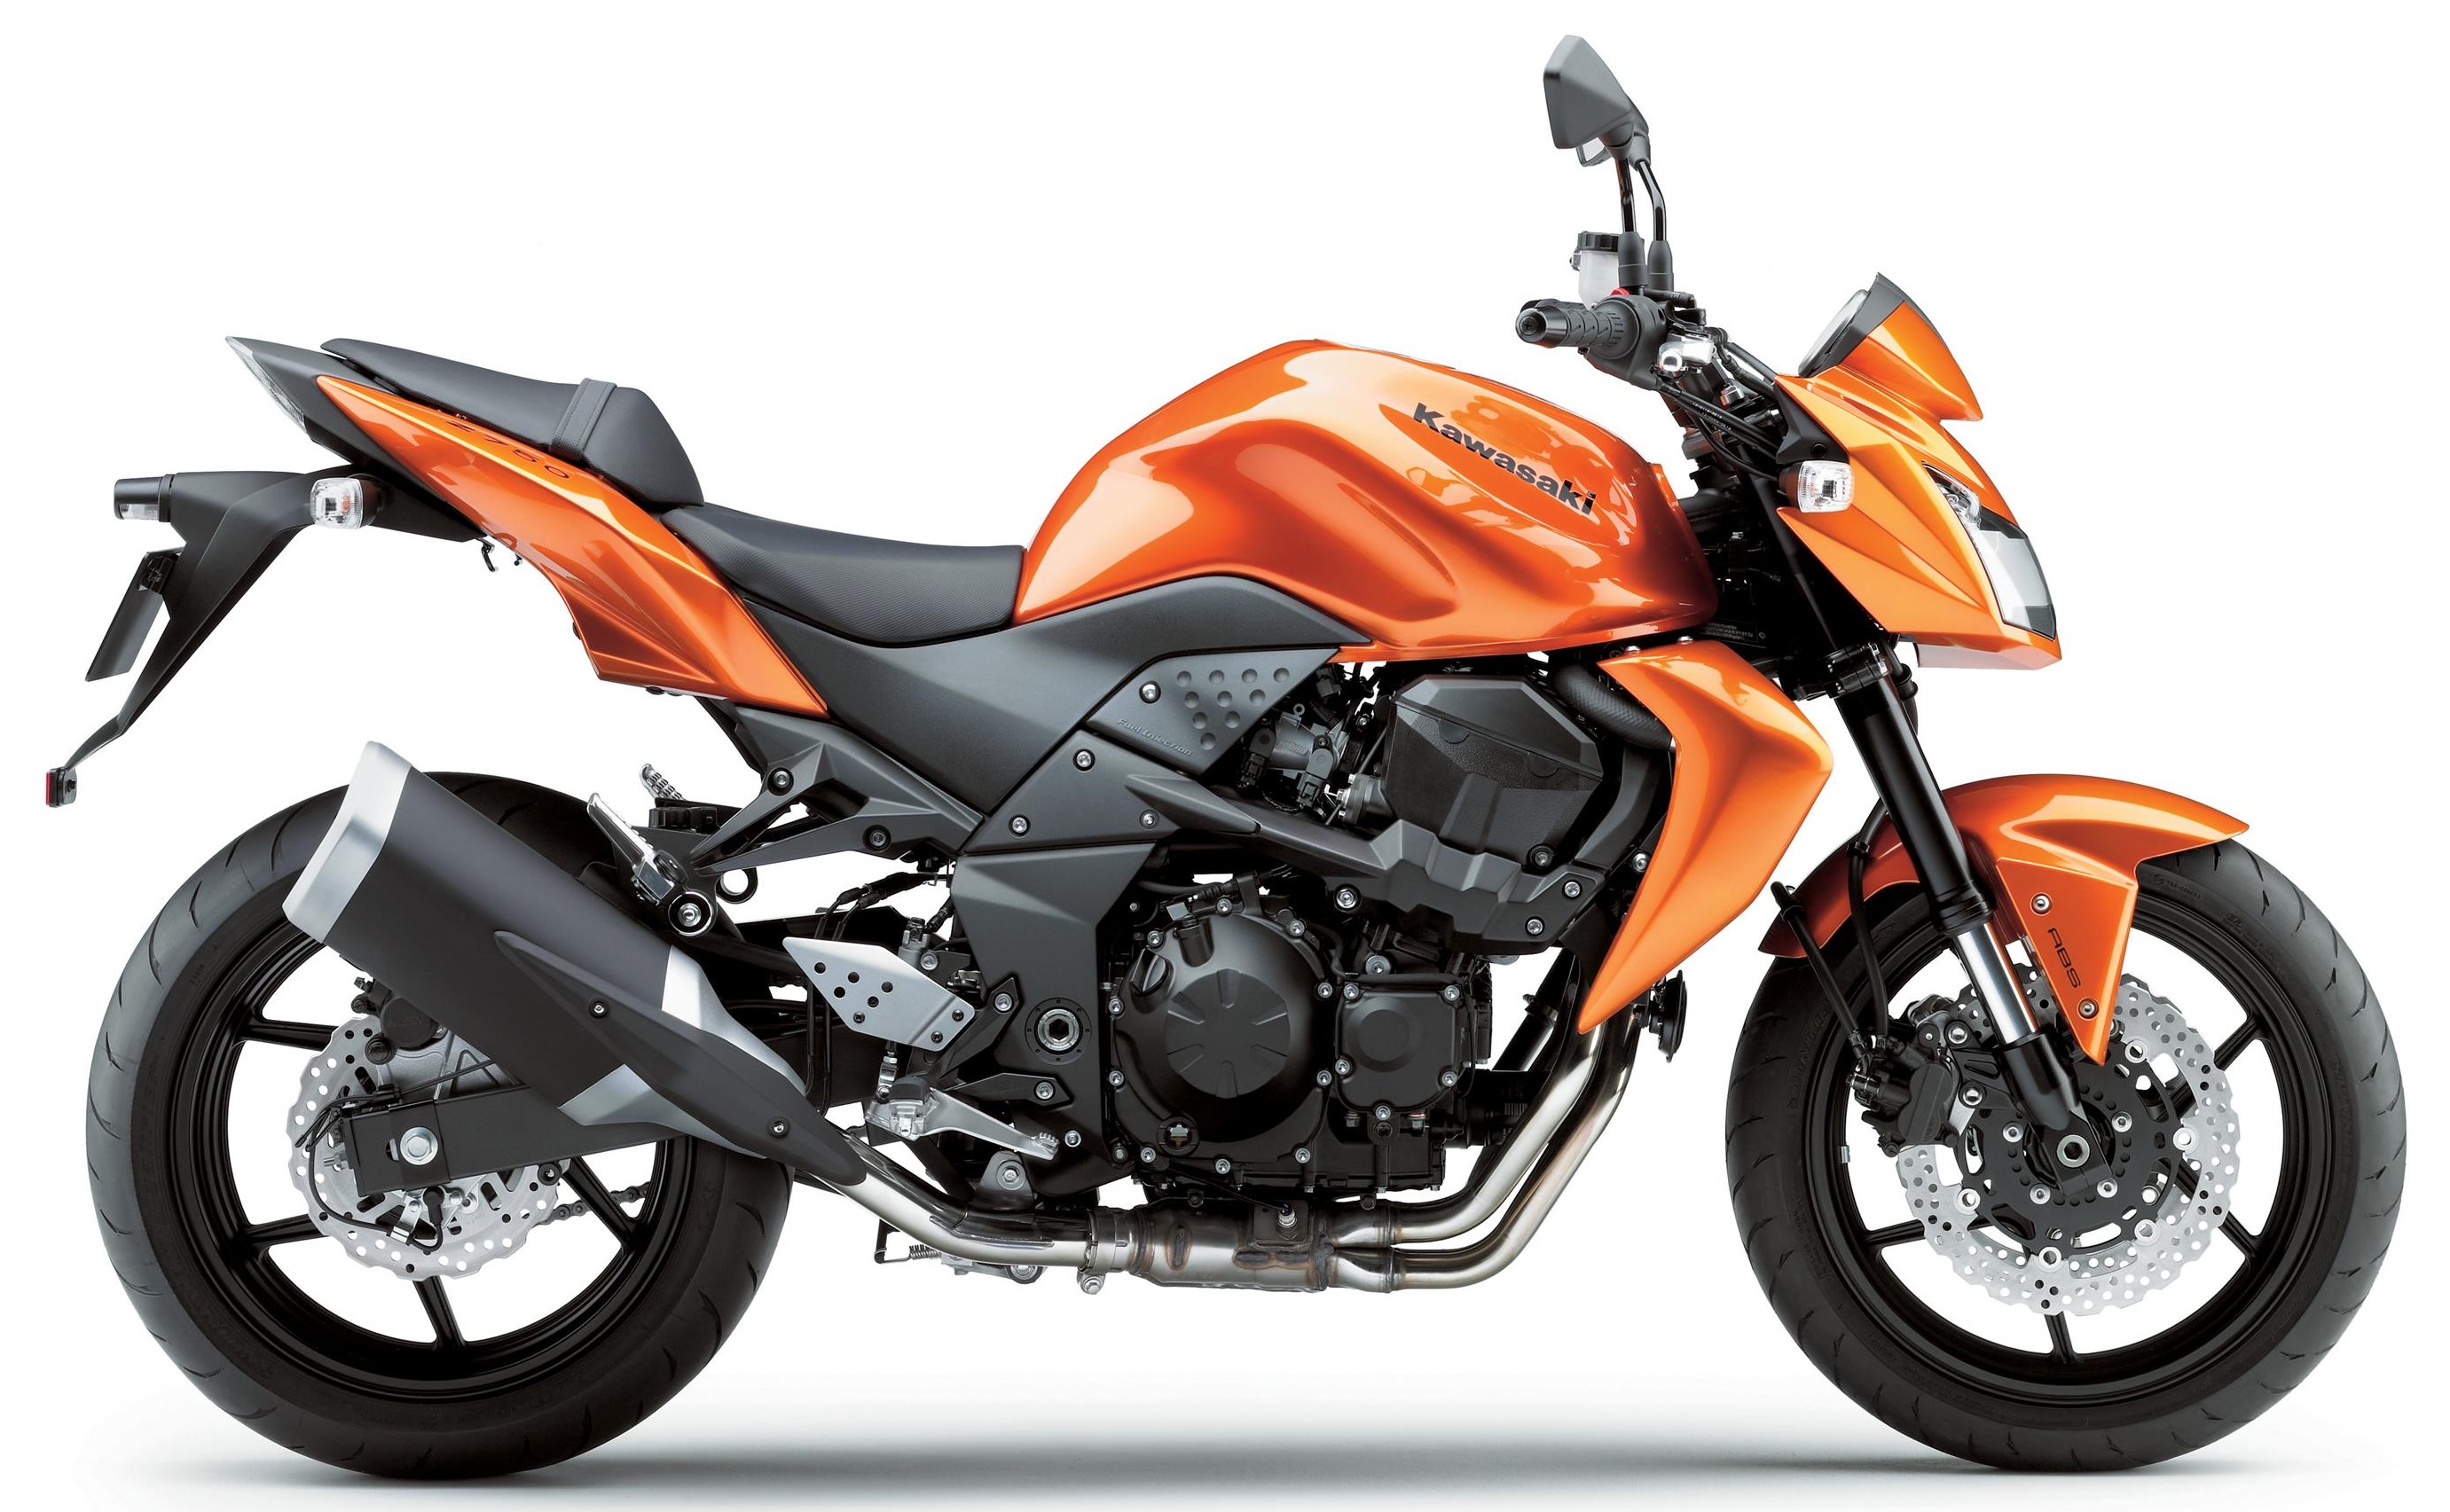 Kawasaki Z750 Motorbikes For Sale - Bike